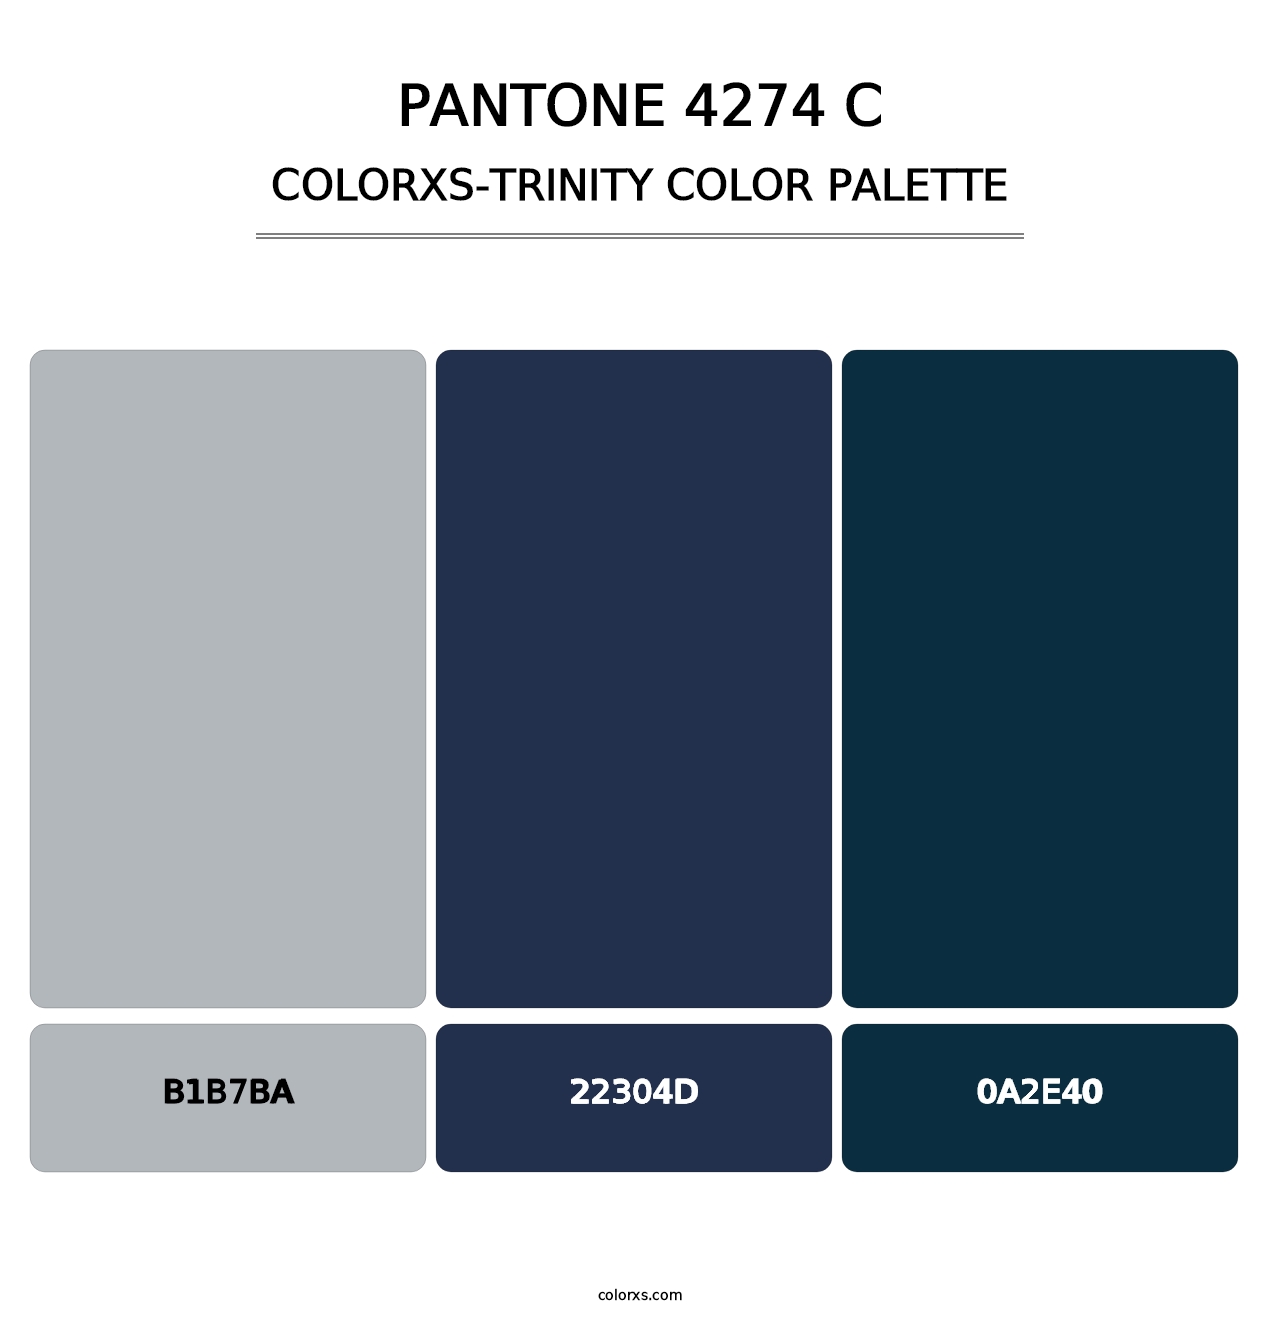 PANTONE 4274 C - Colorxs Trinity Palette